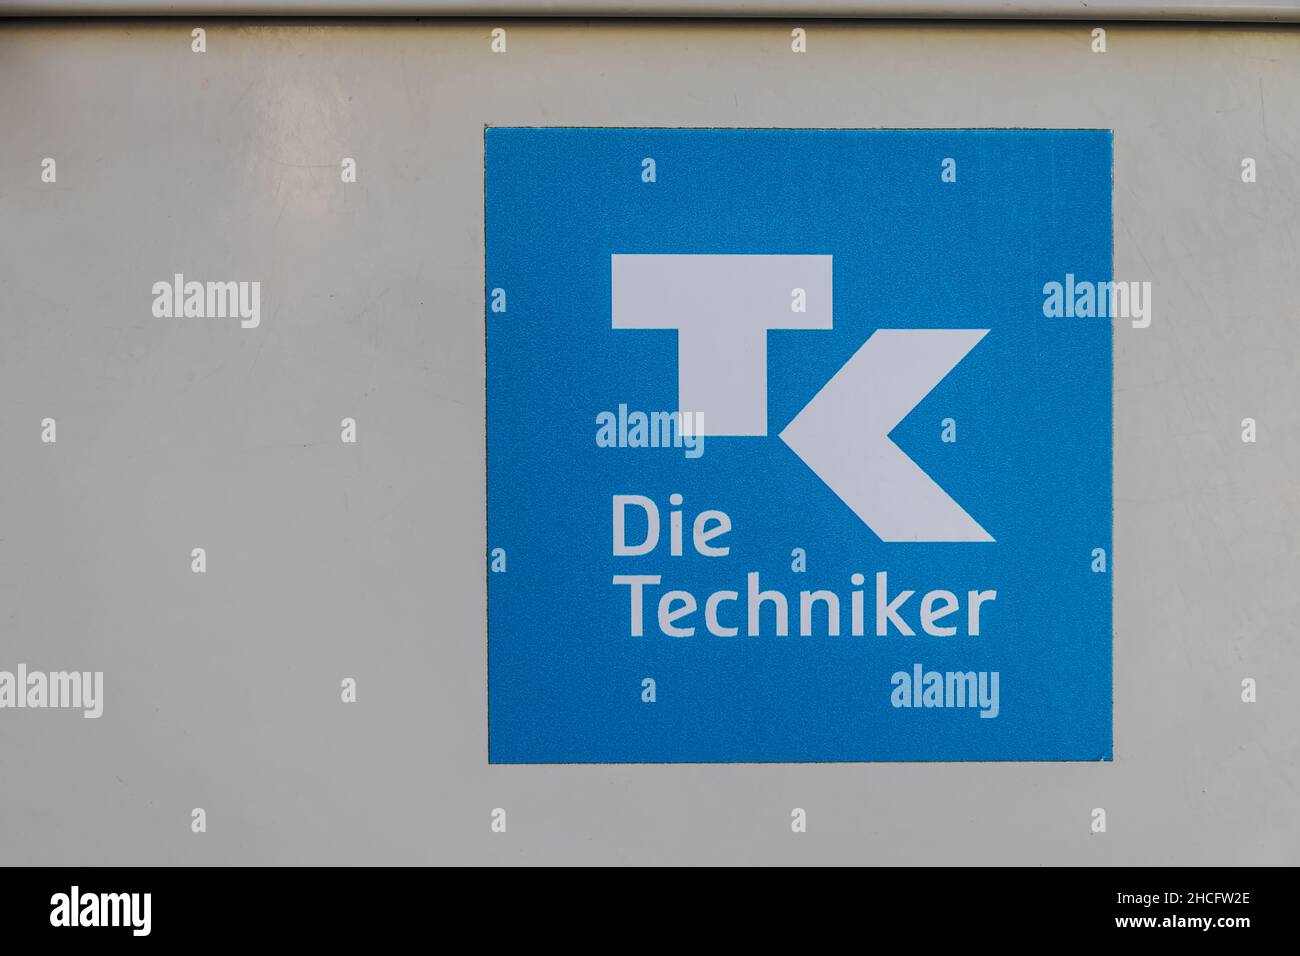 GIESSEN, ALLEMAGNE - 2021 04 09: Signe de l'assurance maladie Techniker Krankenkasse - TK - Die Techniker à Giessen, Allemagne Banque D'Images